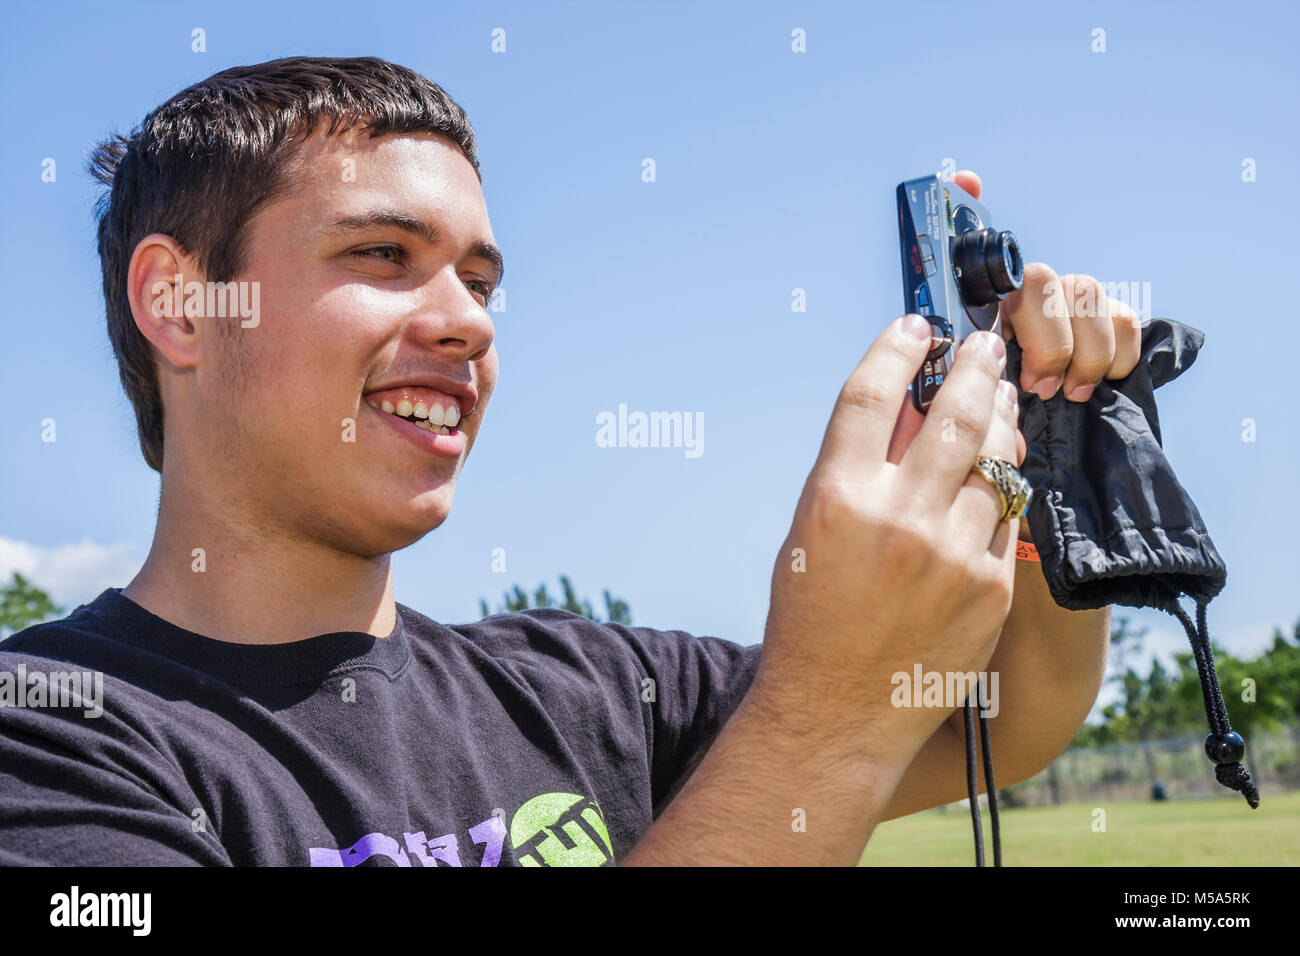 Miami Florida, Metrozoo Zoo, Hispanic Teenager Junge männlich Foto Digitalkamera, Stockfoto